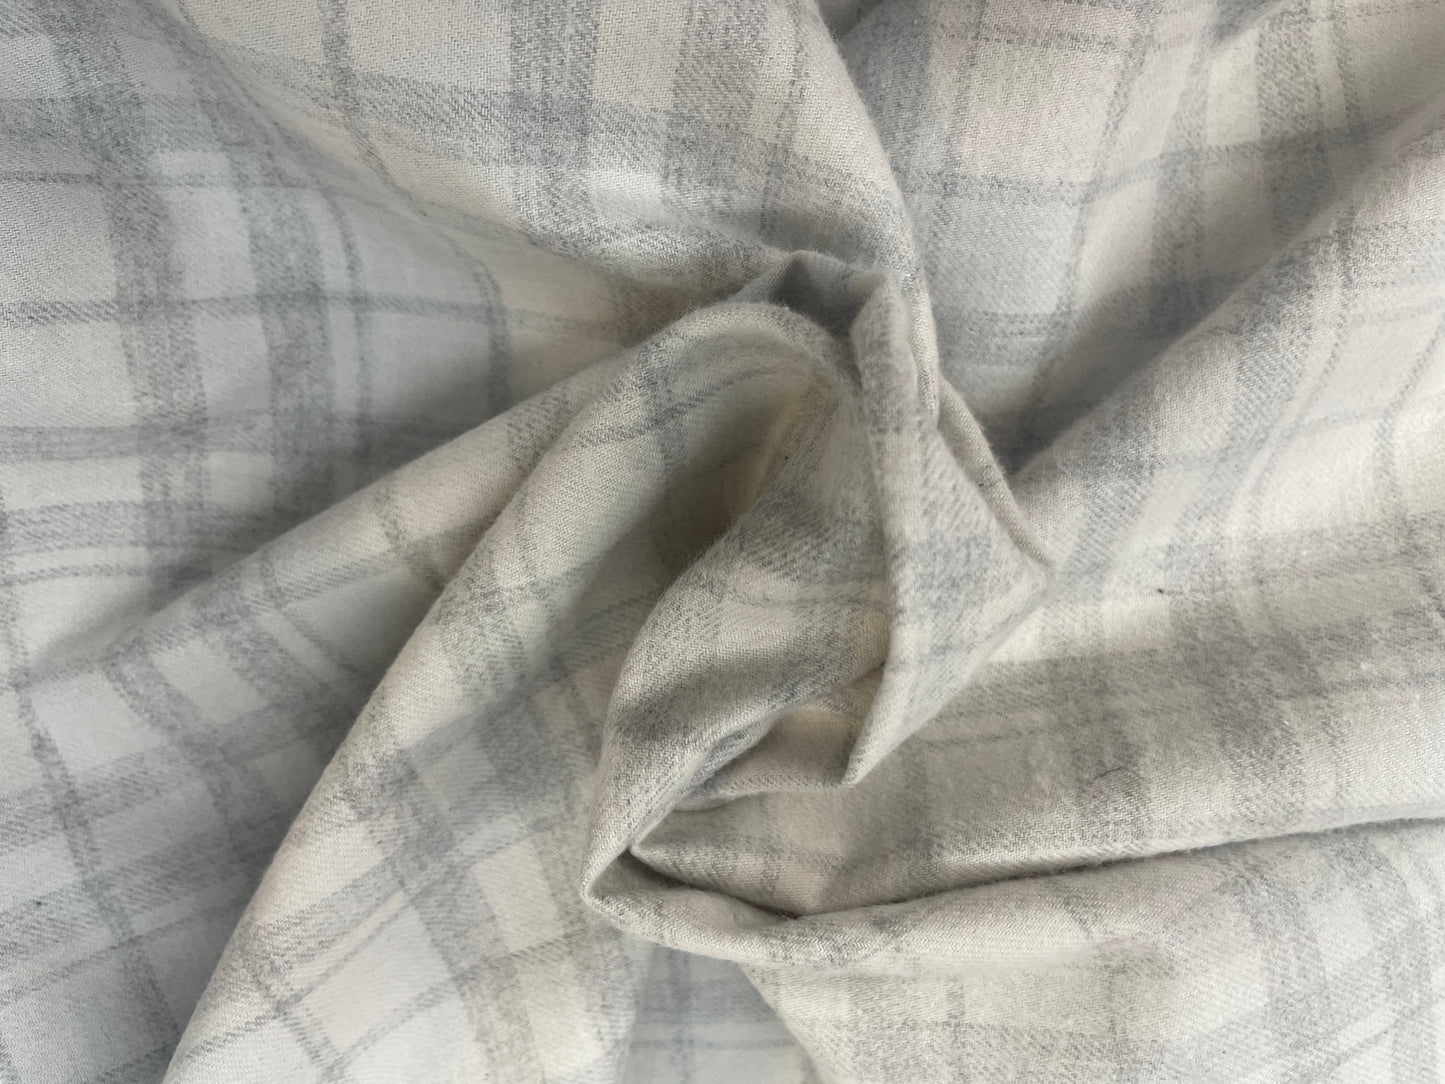 Flannel Cotton Plaid - Off White / Light Gray